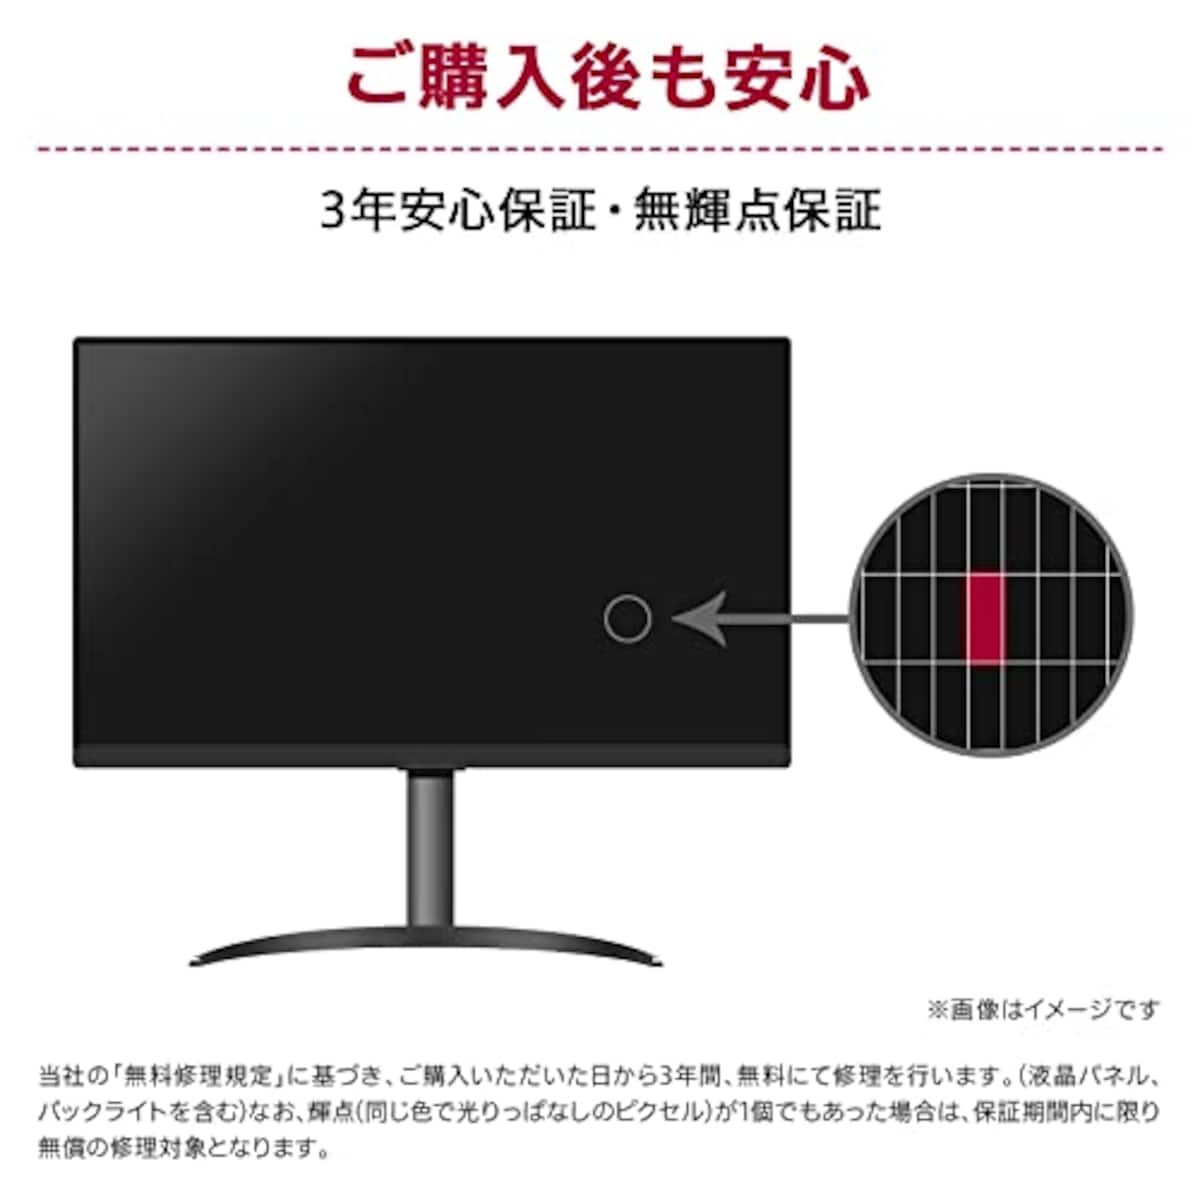  LG Electronics Japan 34型 WFHD(2560×1080) IPS USB Type-C 液晶ディスプレイ ホワイト画像13 